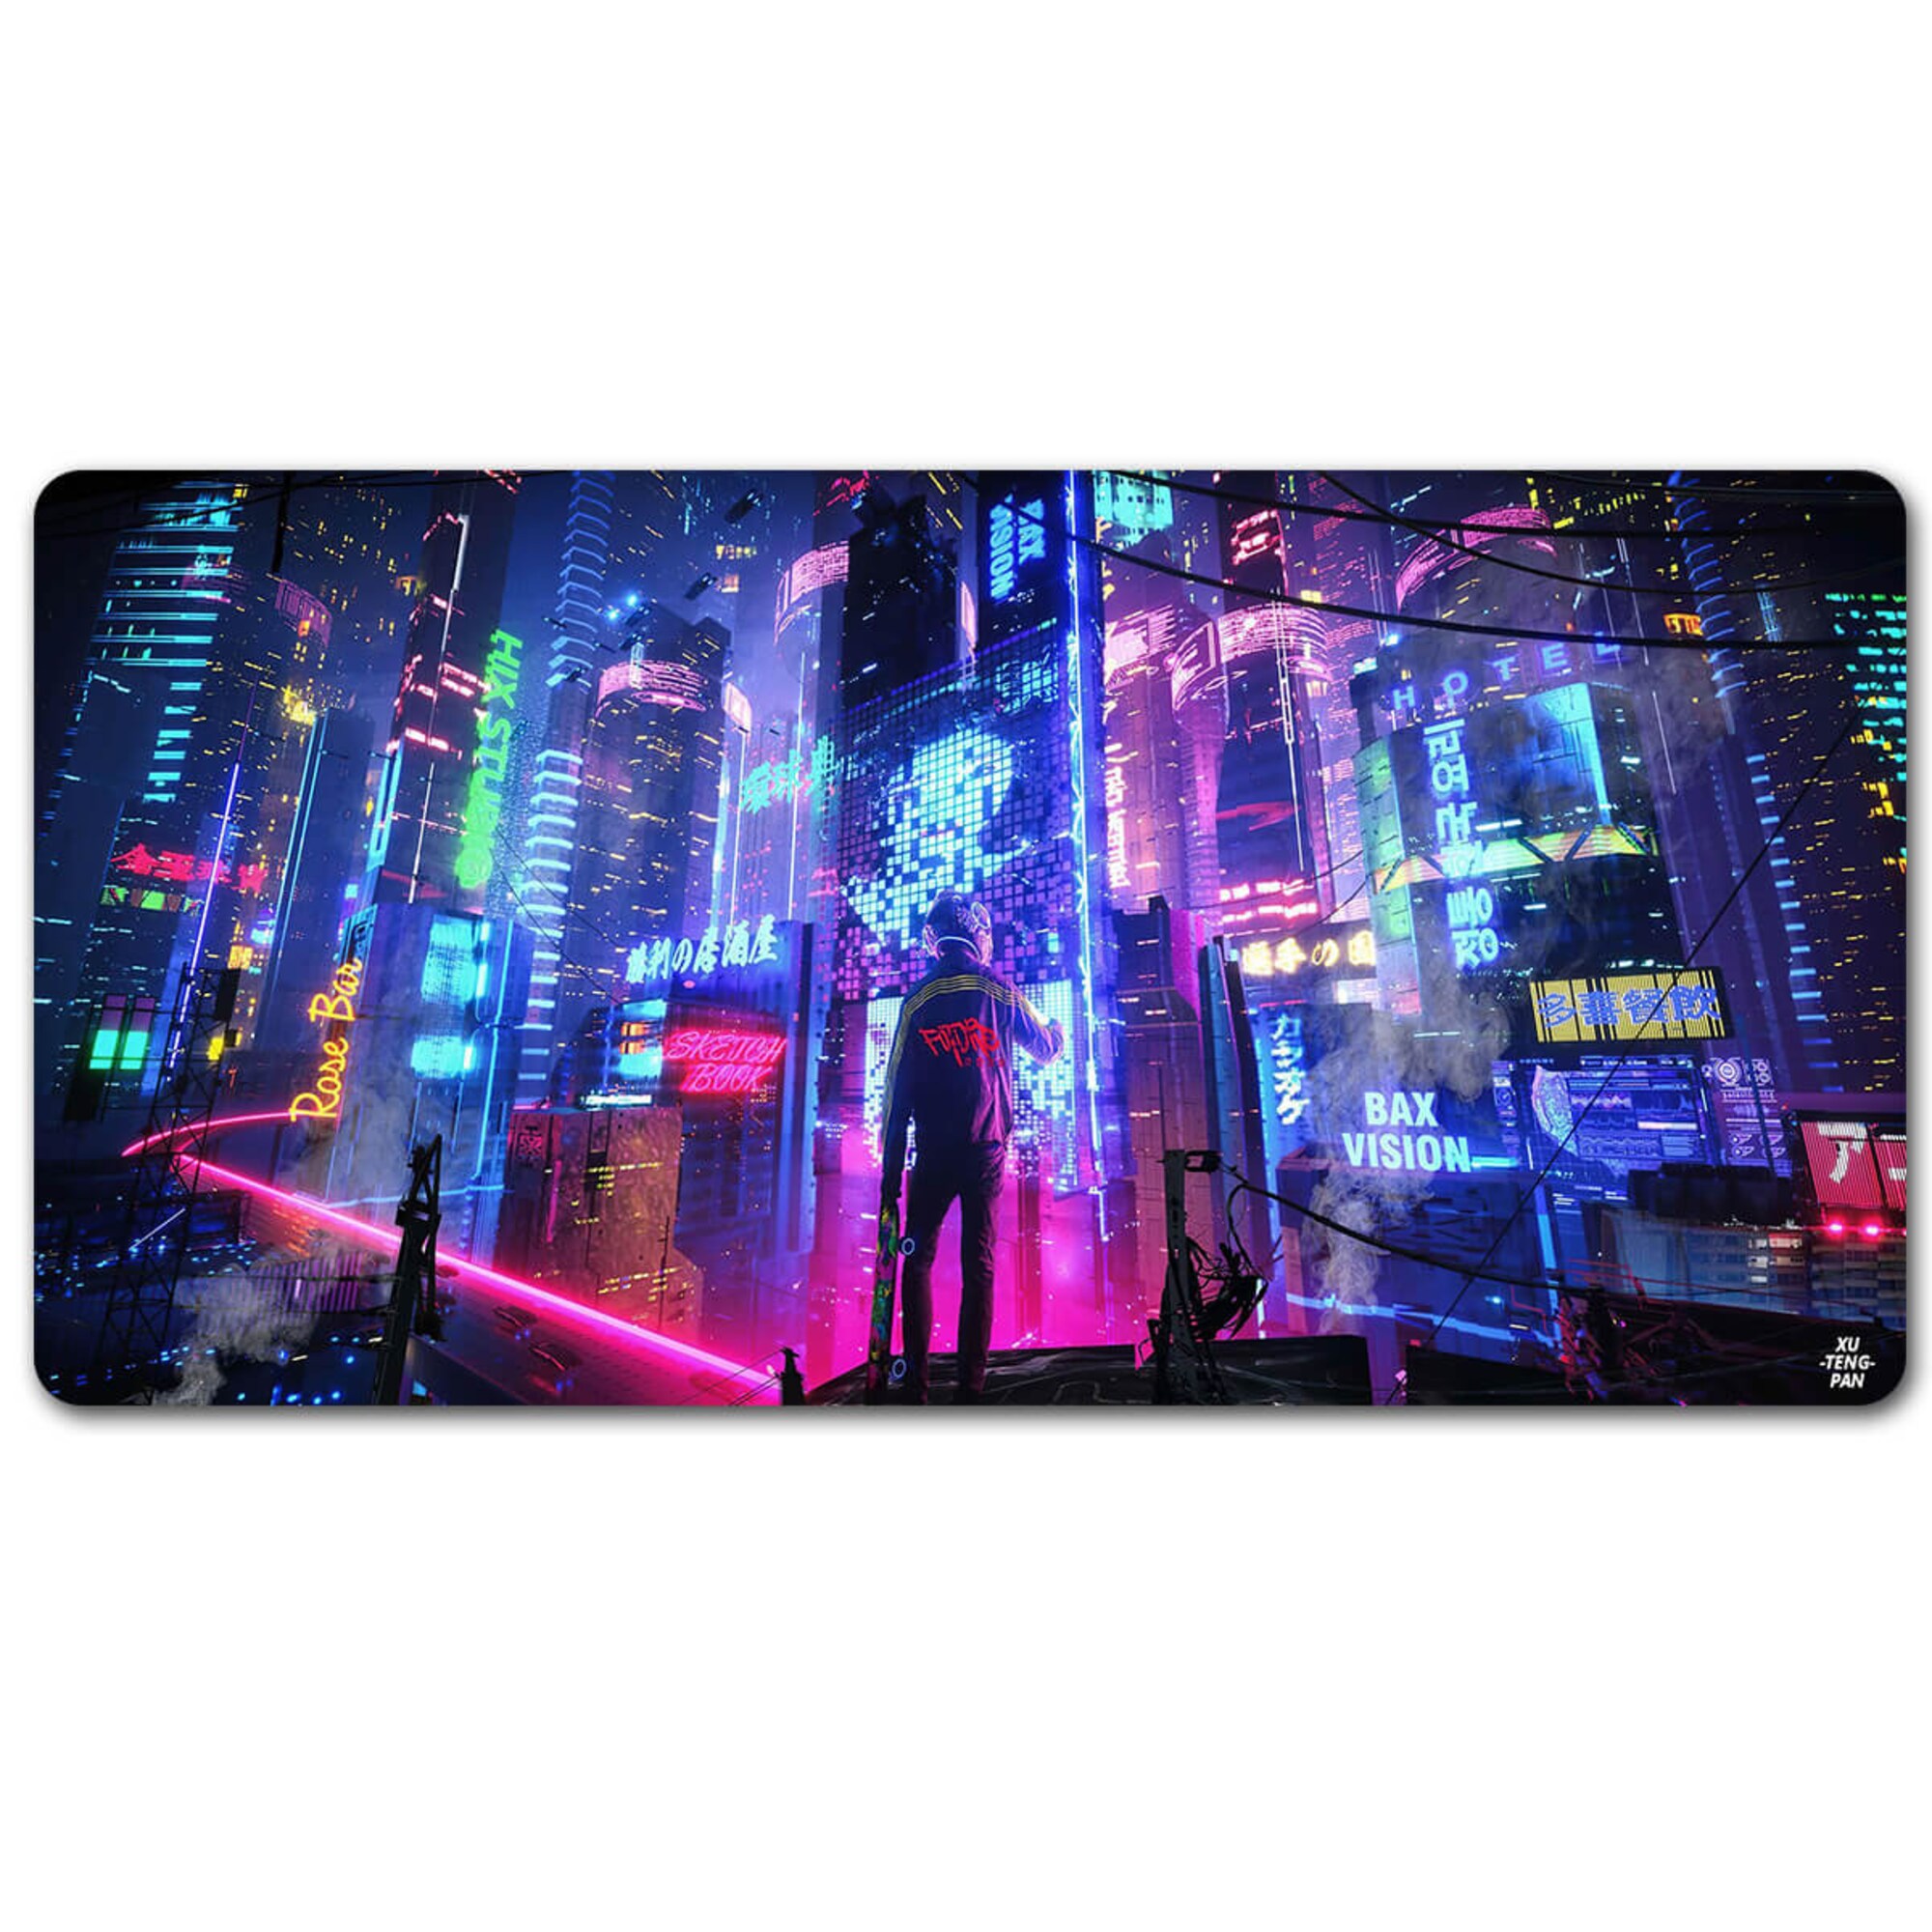 Cyberpunk City Desk Pad(2 Patterns), Retro Vaporwave City Gaming Desk Pad, Neon City Large Gaming Mouse Pad XXL,Japanese City Desk Decor